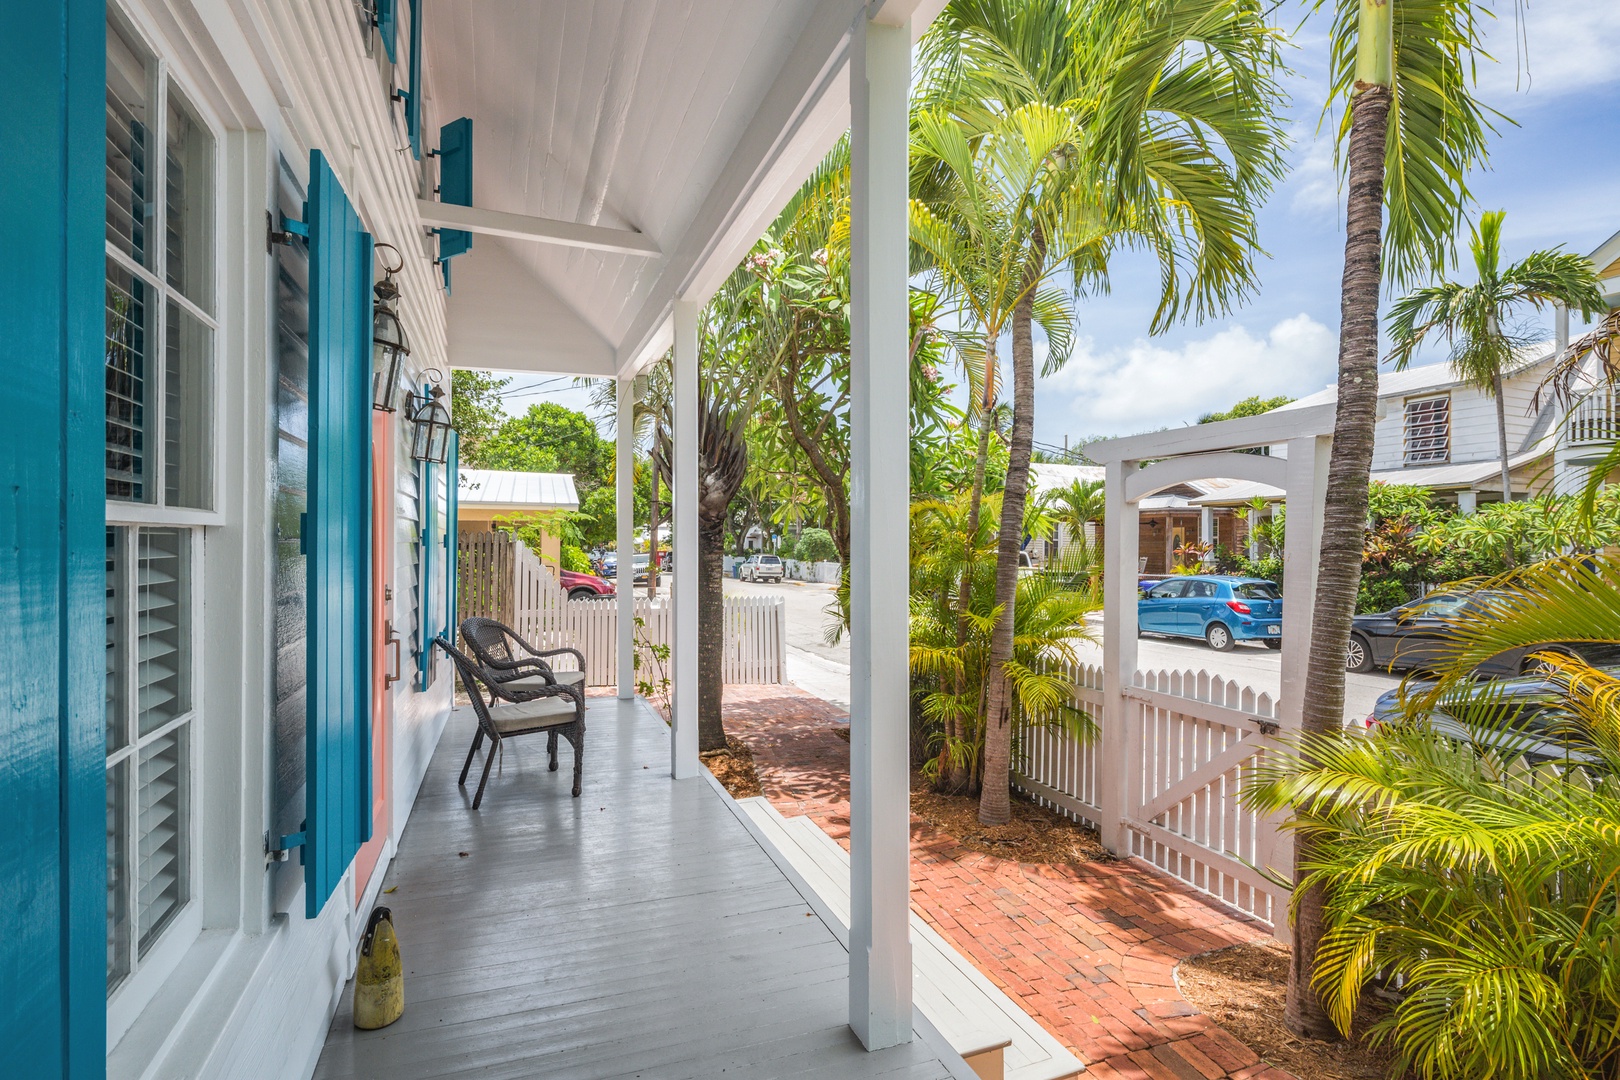 Bahama Dreams Key West Front Porch